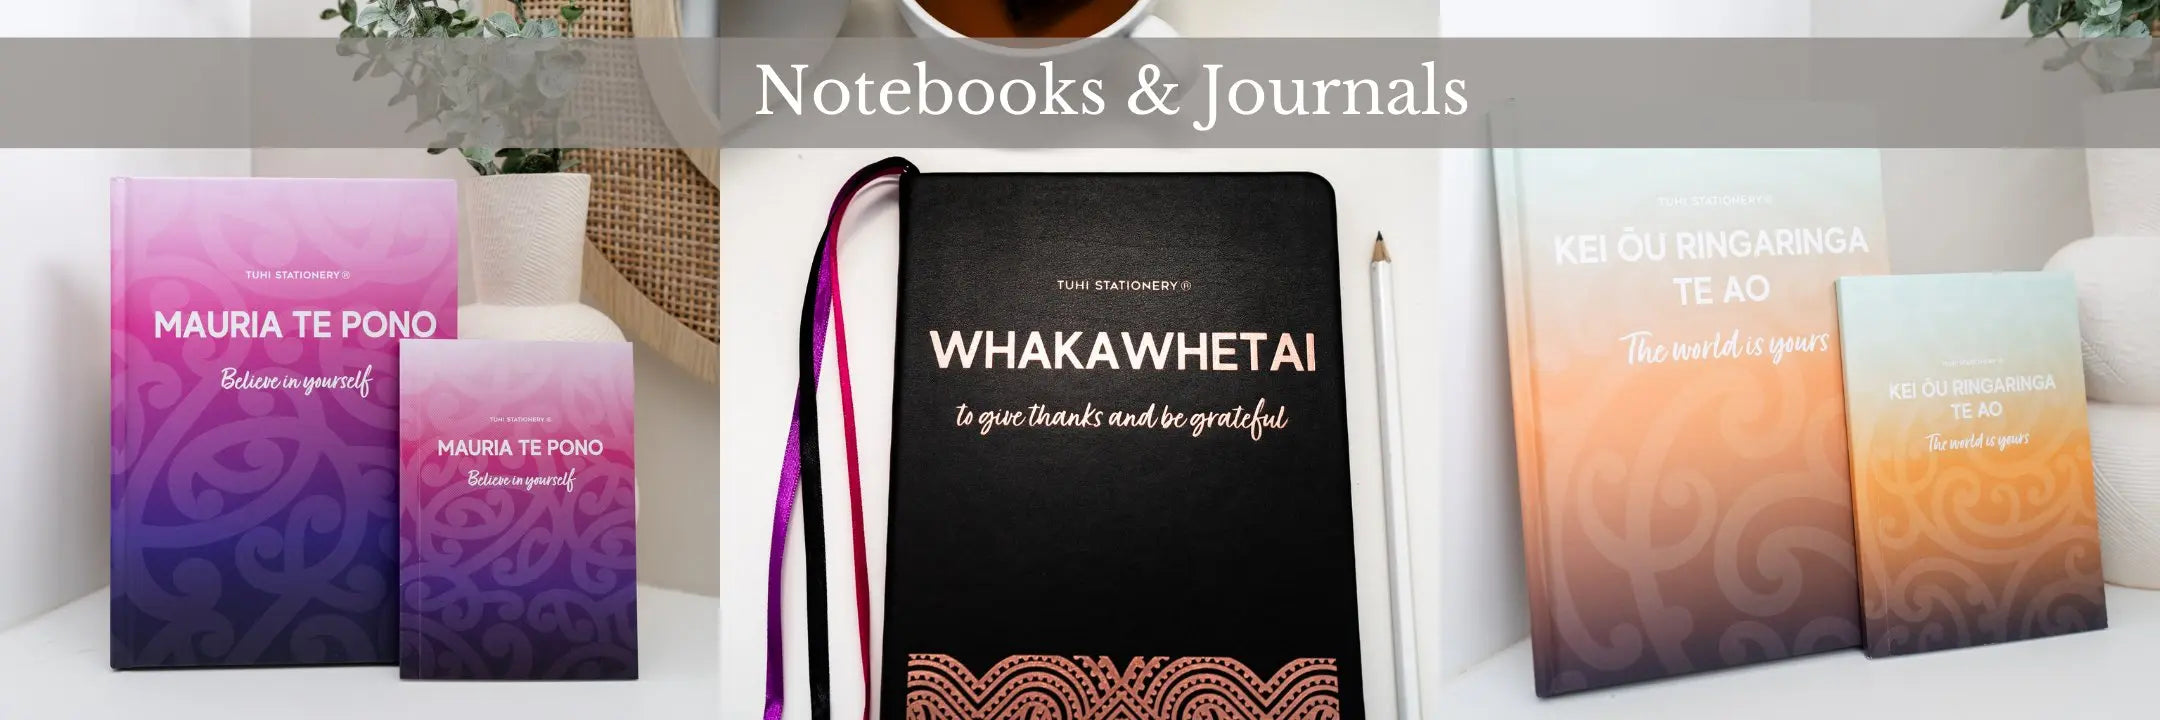 Notebooks-Journals Tuhi Stationery Ltd